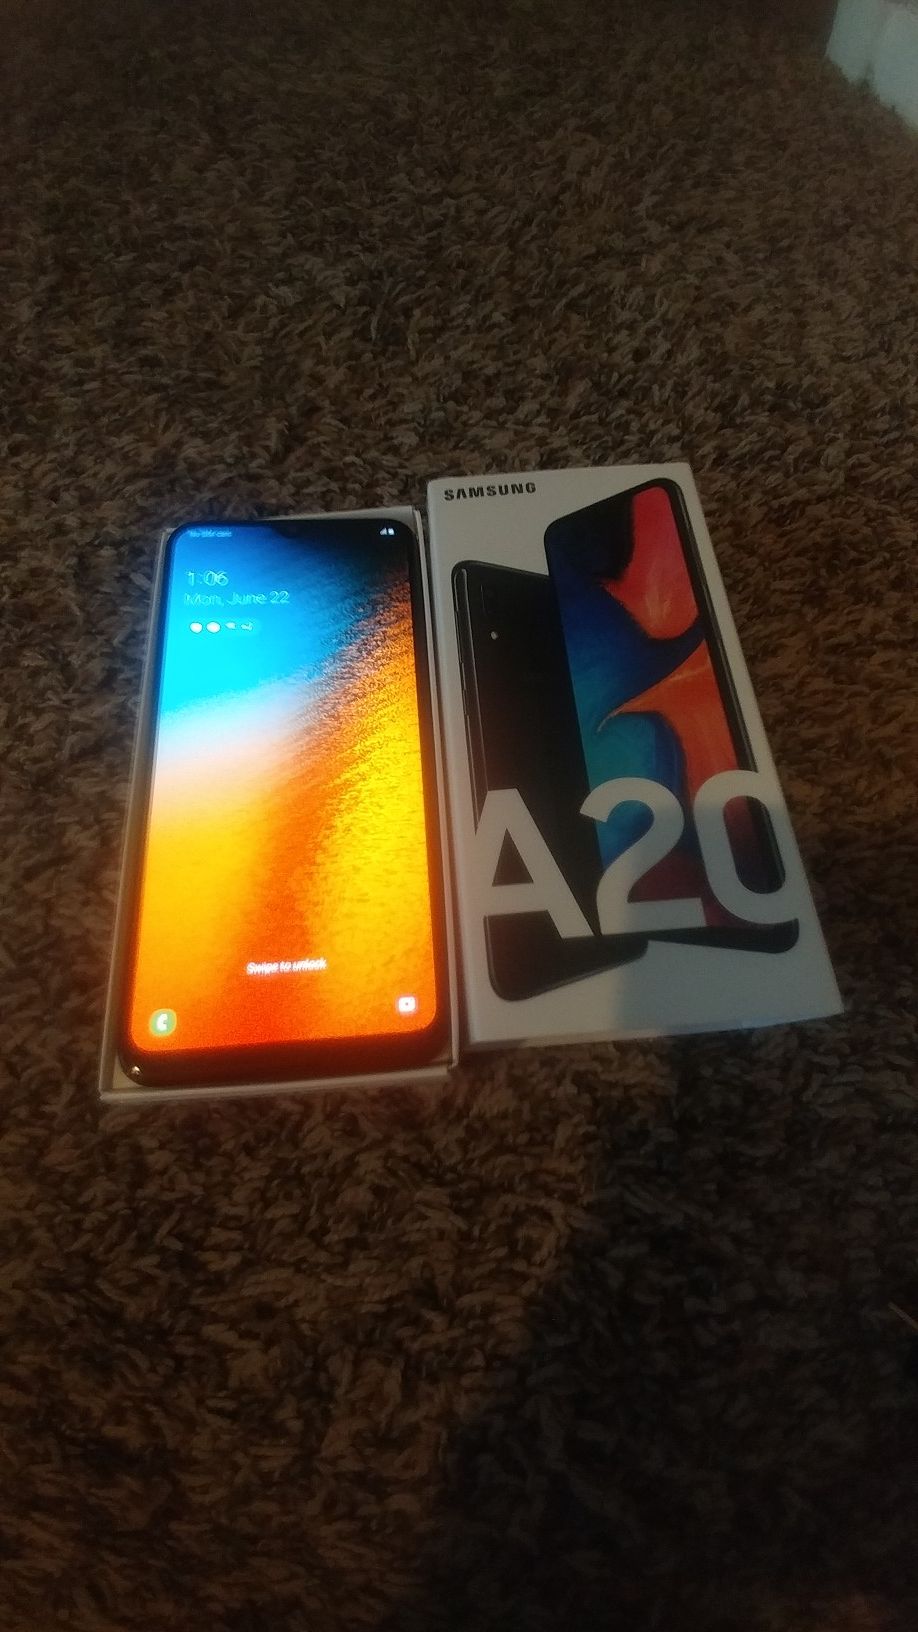 A20 Samsung Galaxy Brand new in the box